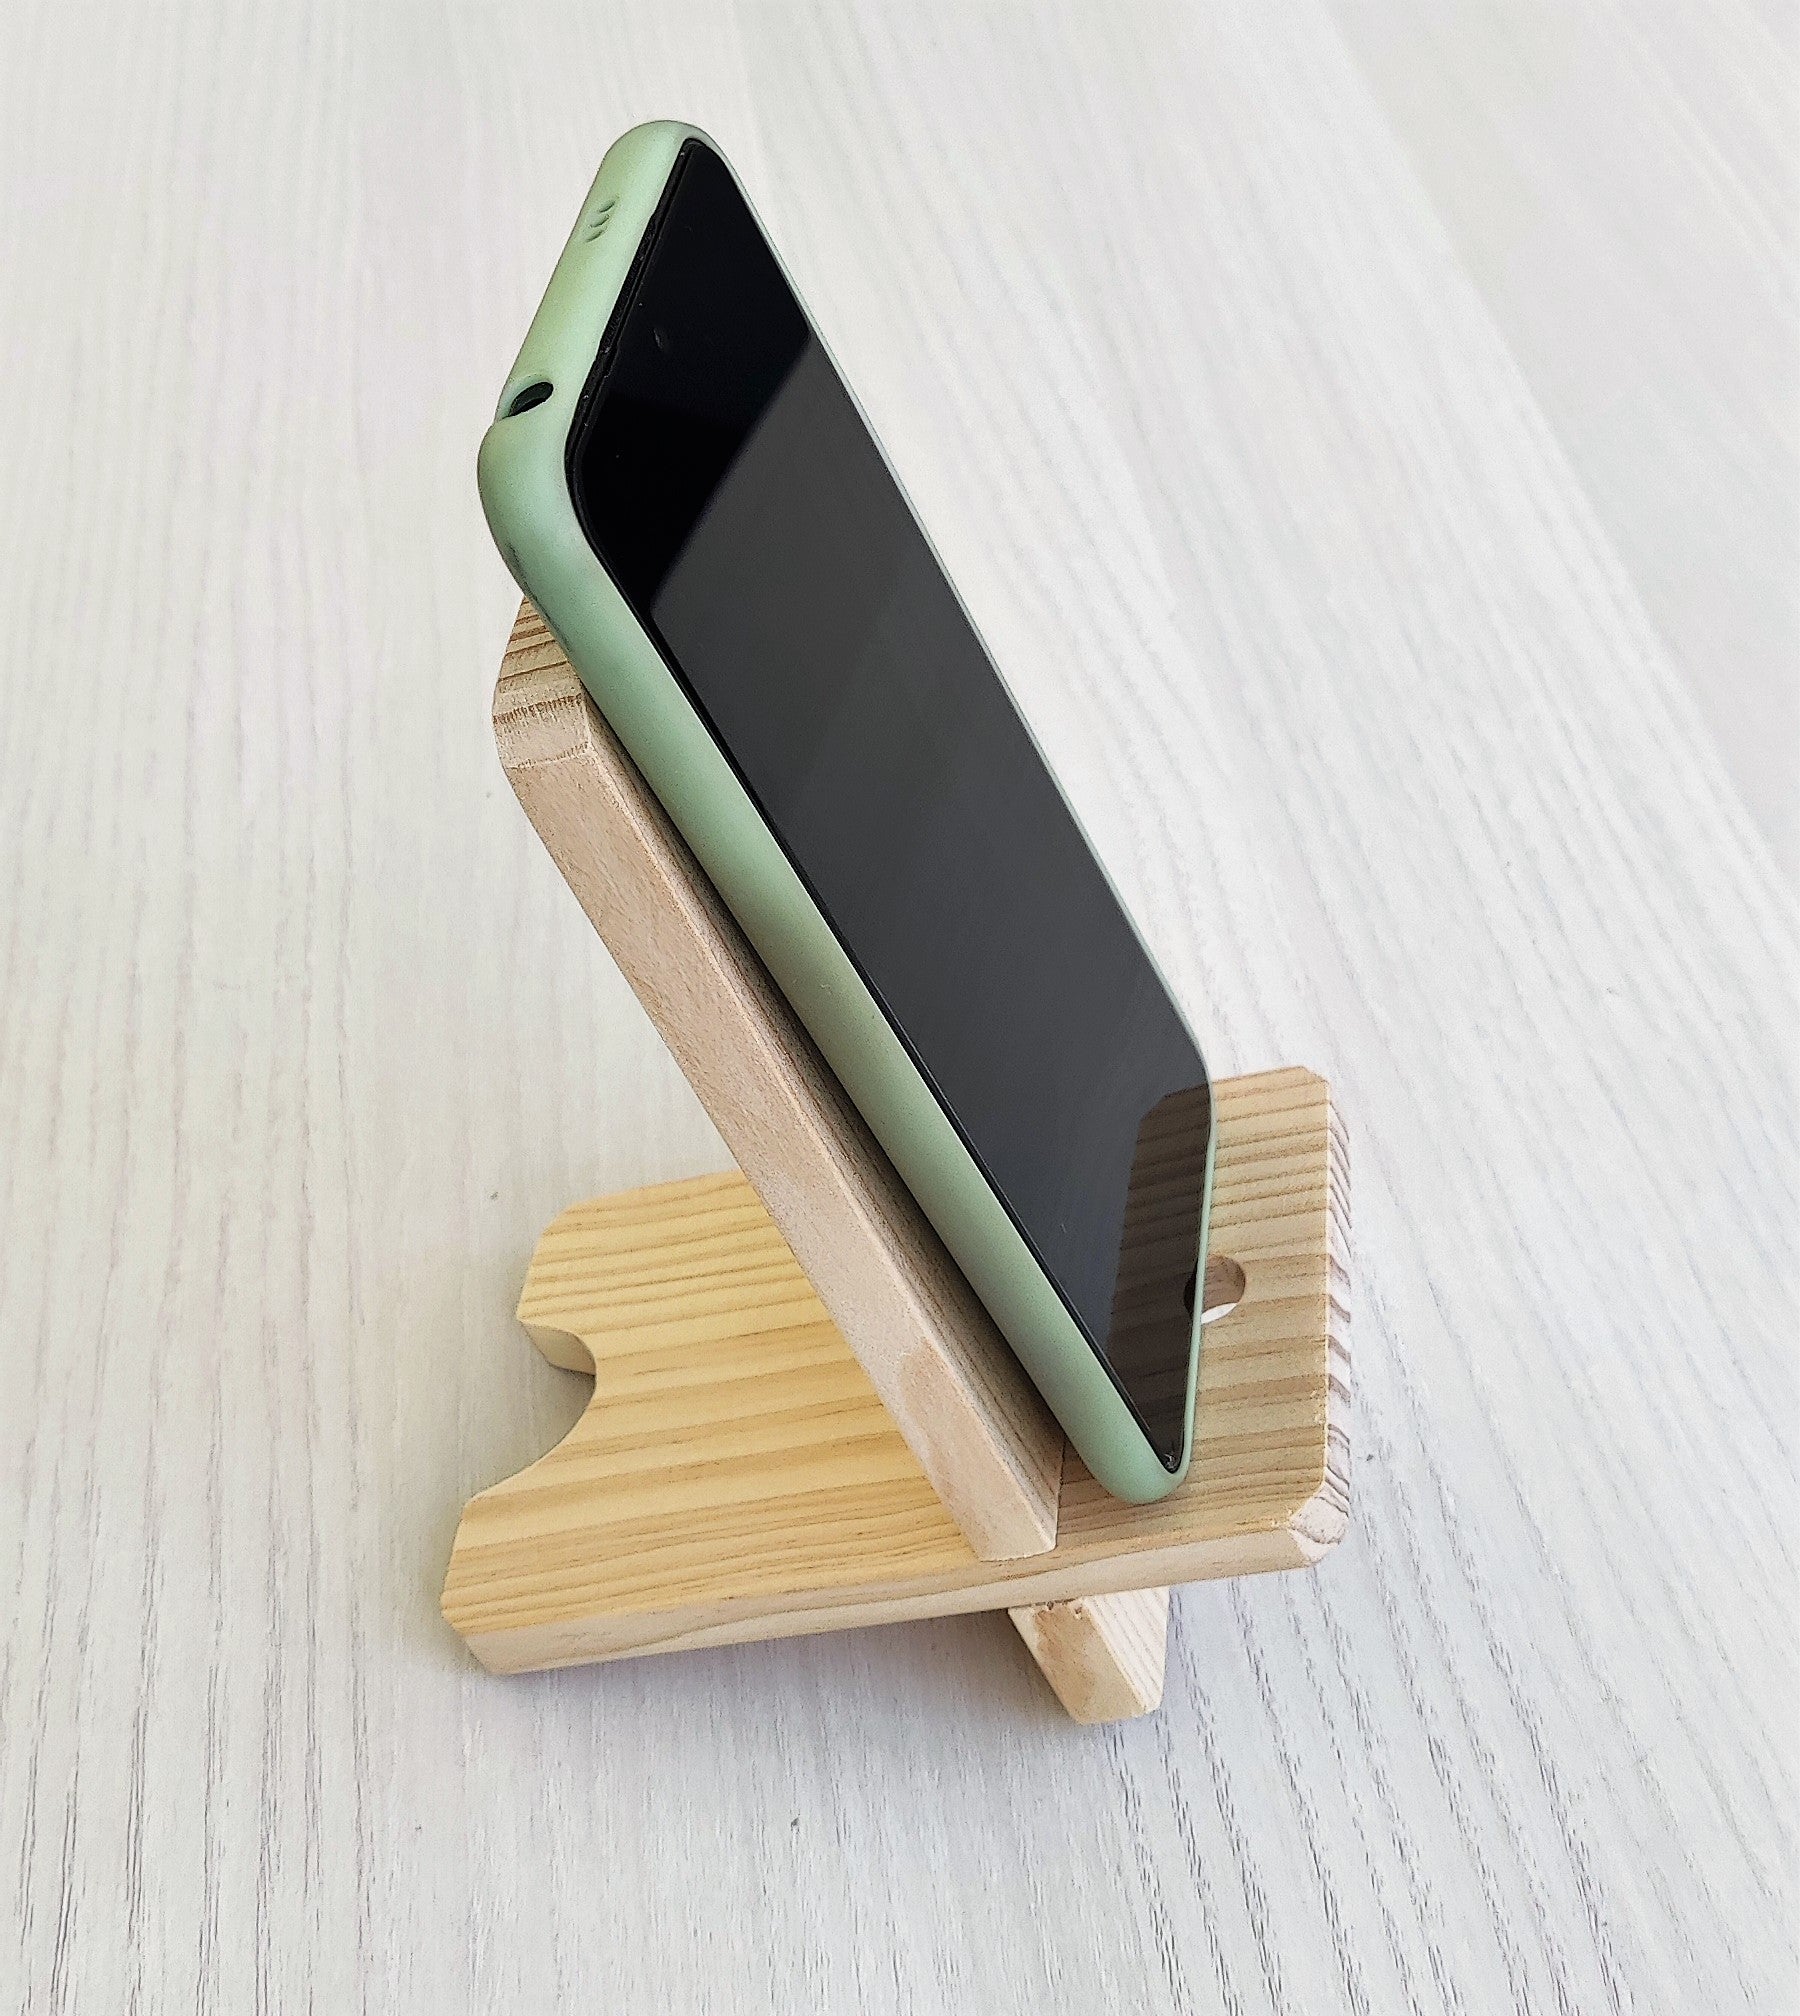 Soporte para móvil de mesa en madera – Conturegalo